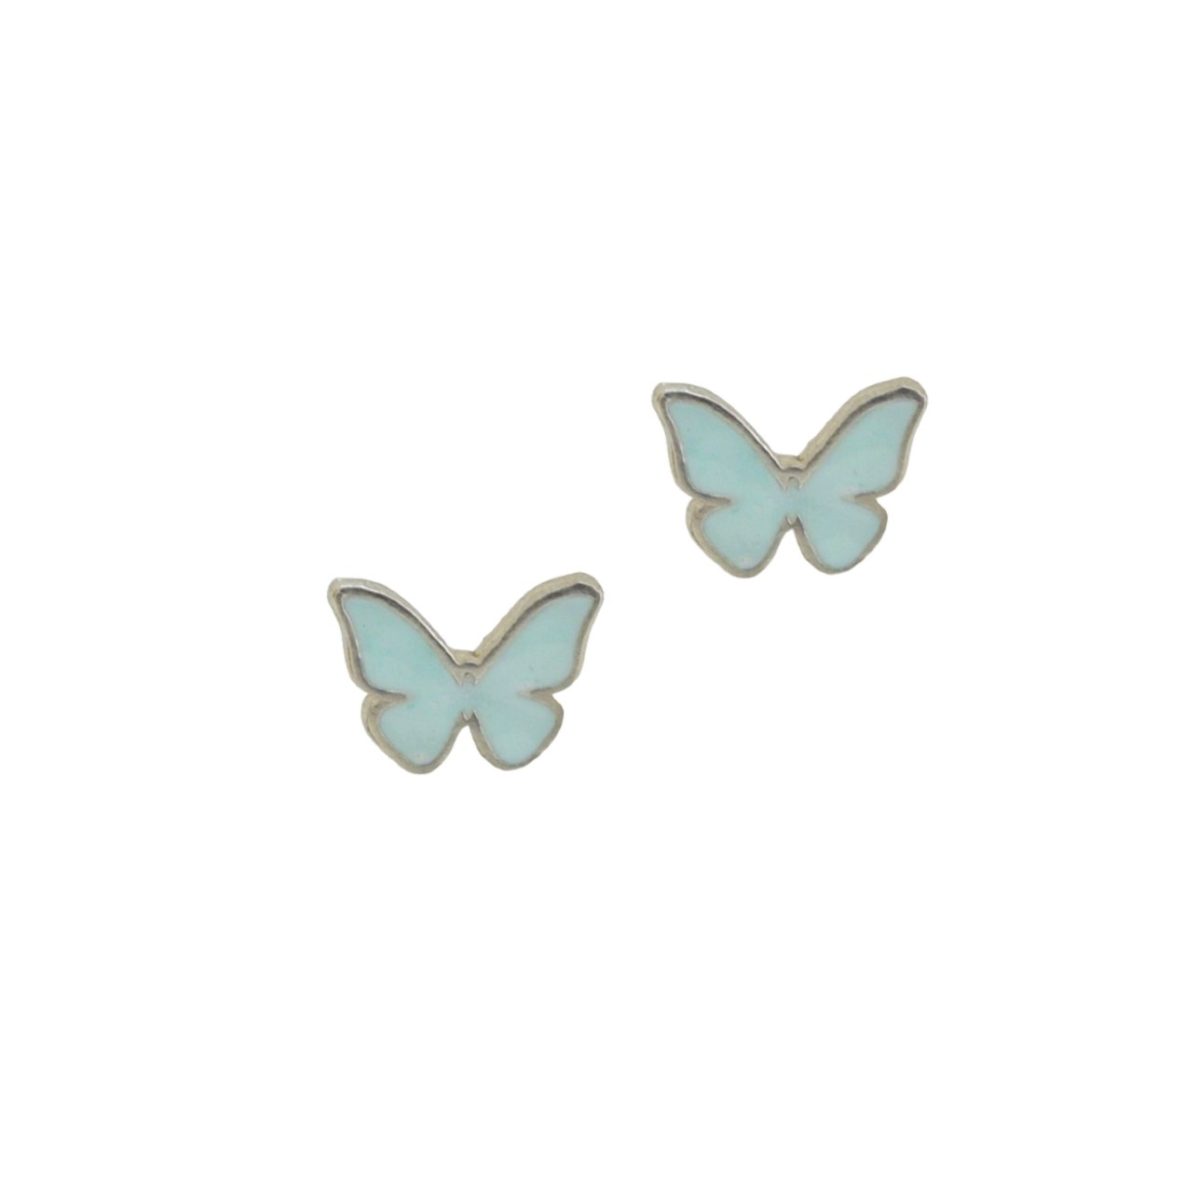 “Butterfly”  ασημένια σκουλαρίκια “Butterfly”  ασημένια σκουλαρίκια “Butterfly”  ασημένια σκουλαρίκια 4